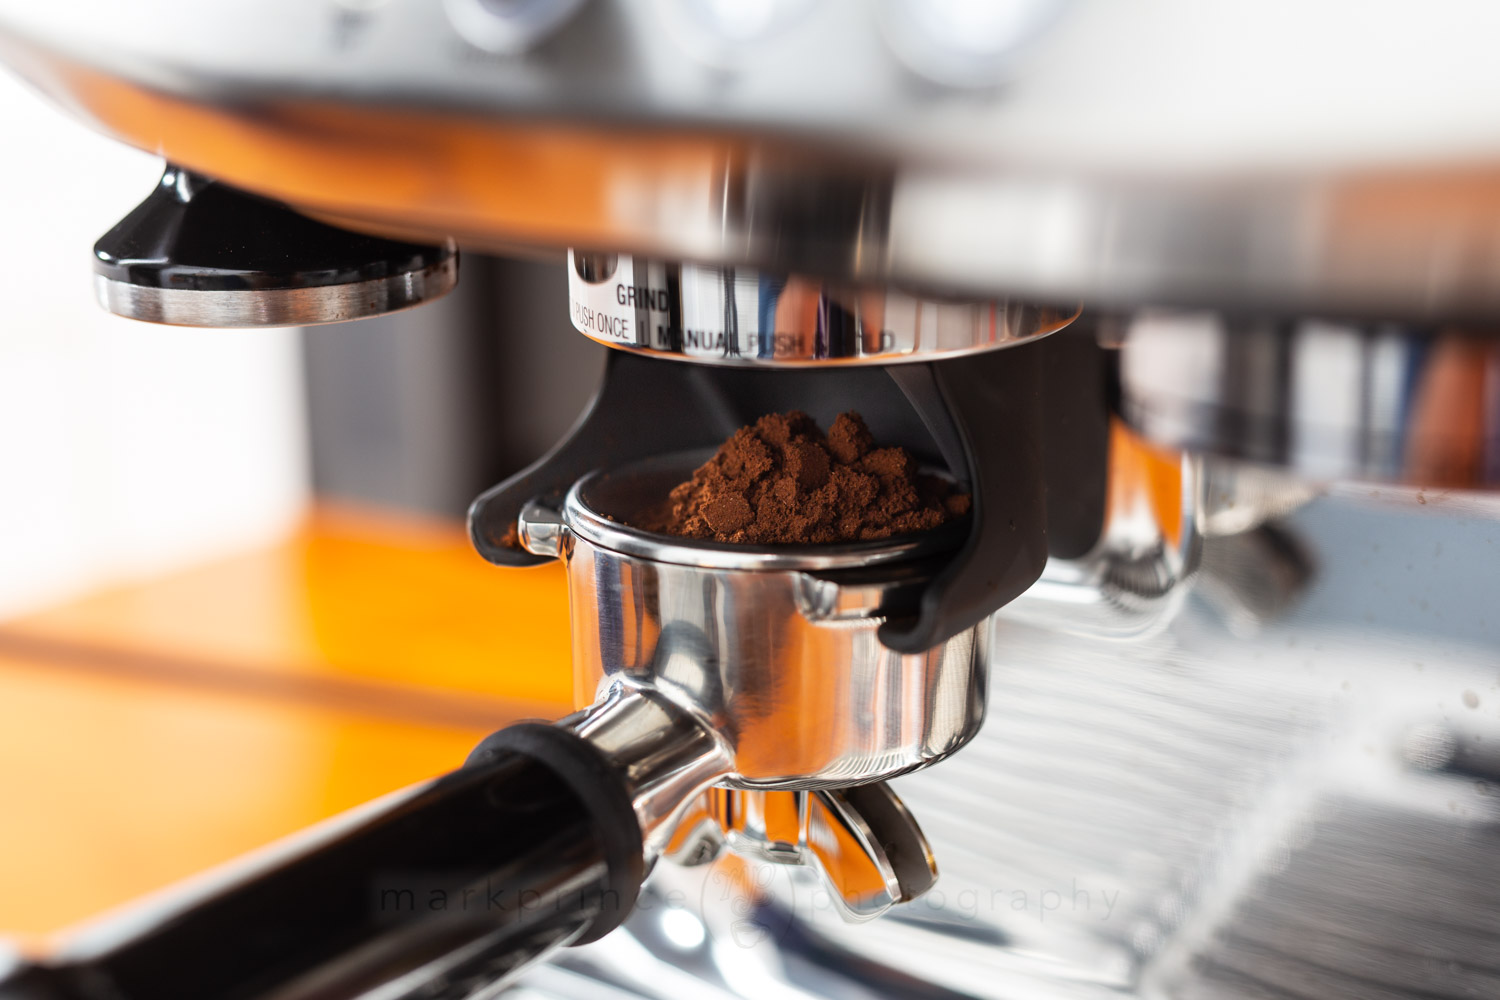 How To Make a Macchiato: a Definitive Guide » CoffeeGeek